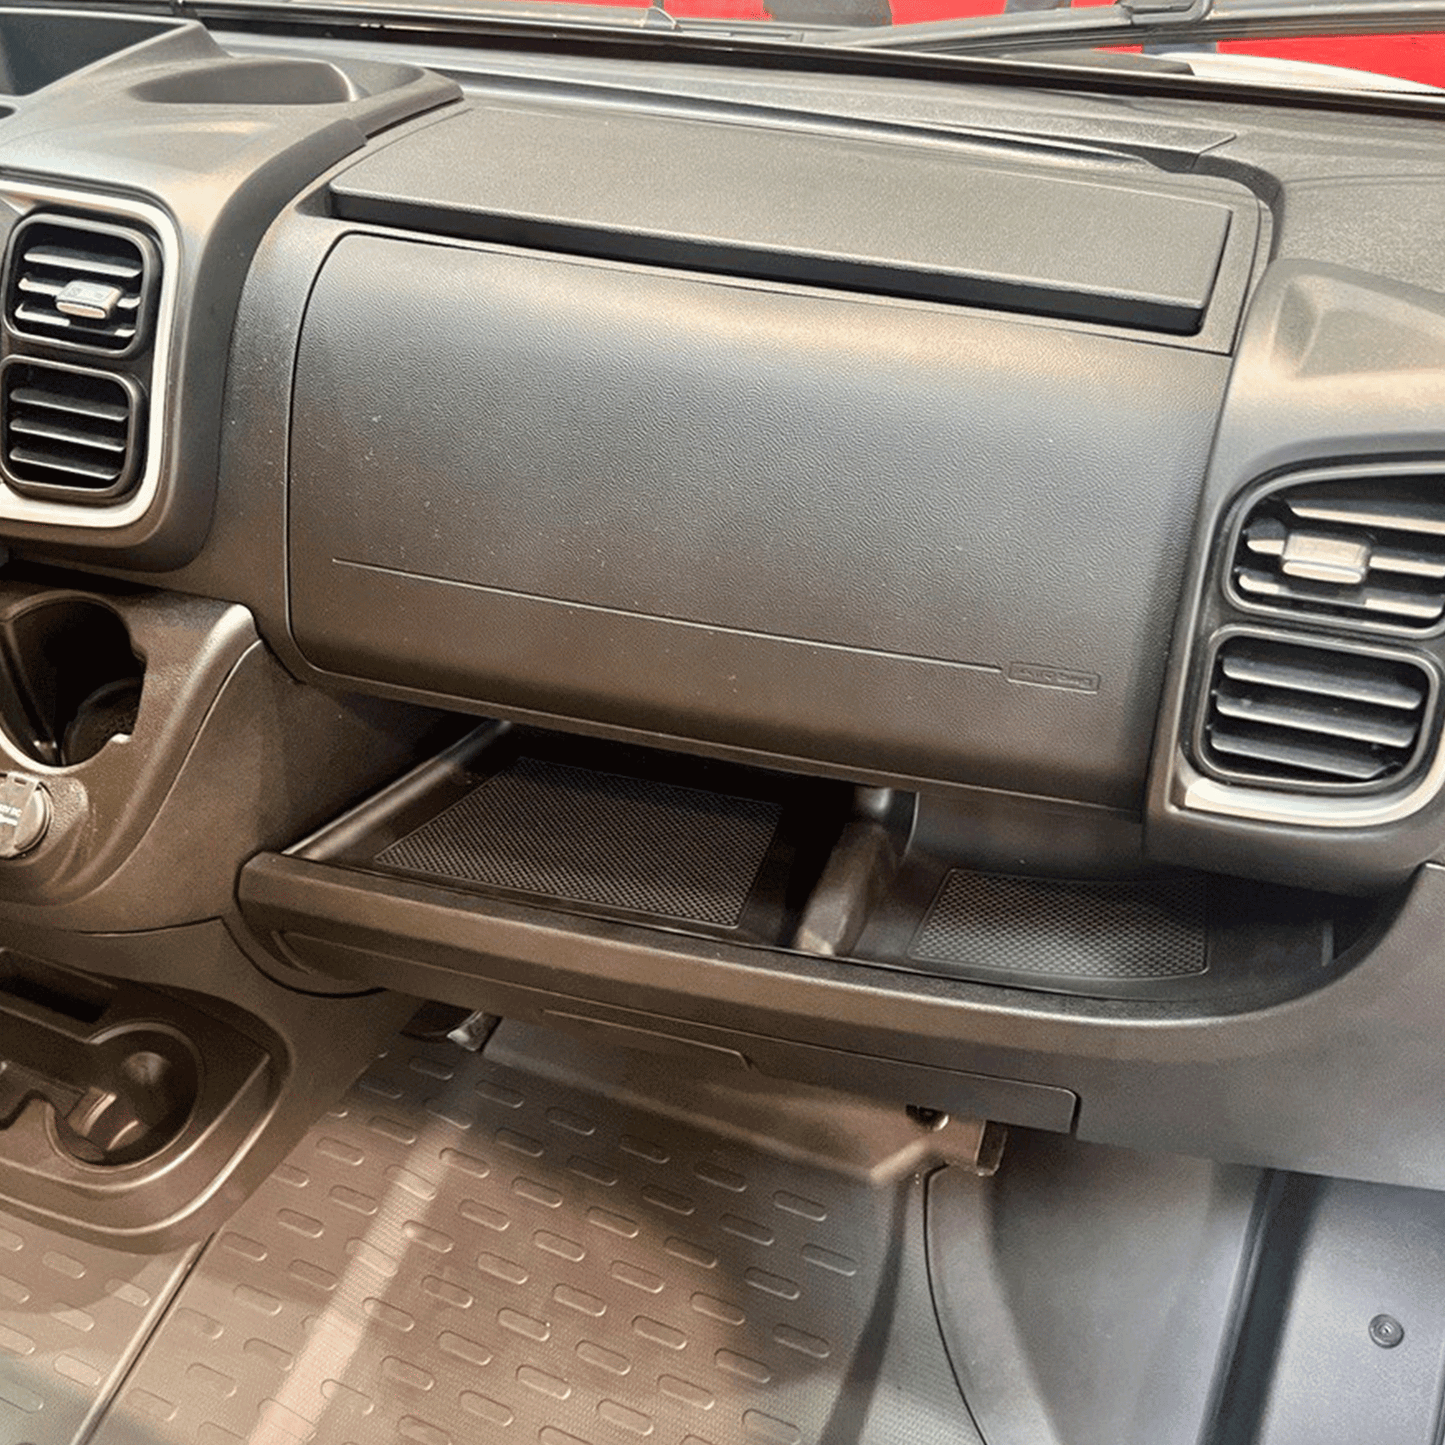 Peugeot Boxer Lower New Dashboard Rubber Insert/Mat Black LHD autotrail motorhome